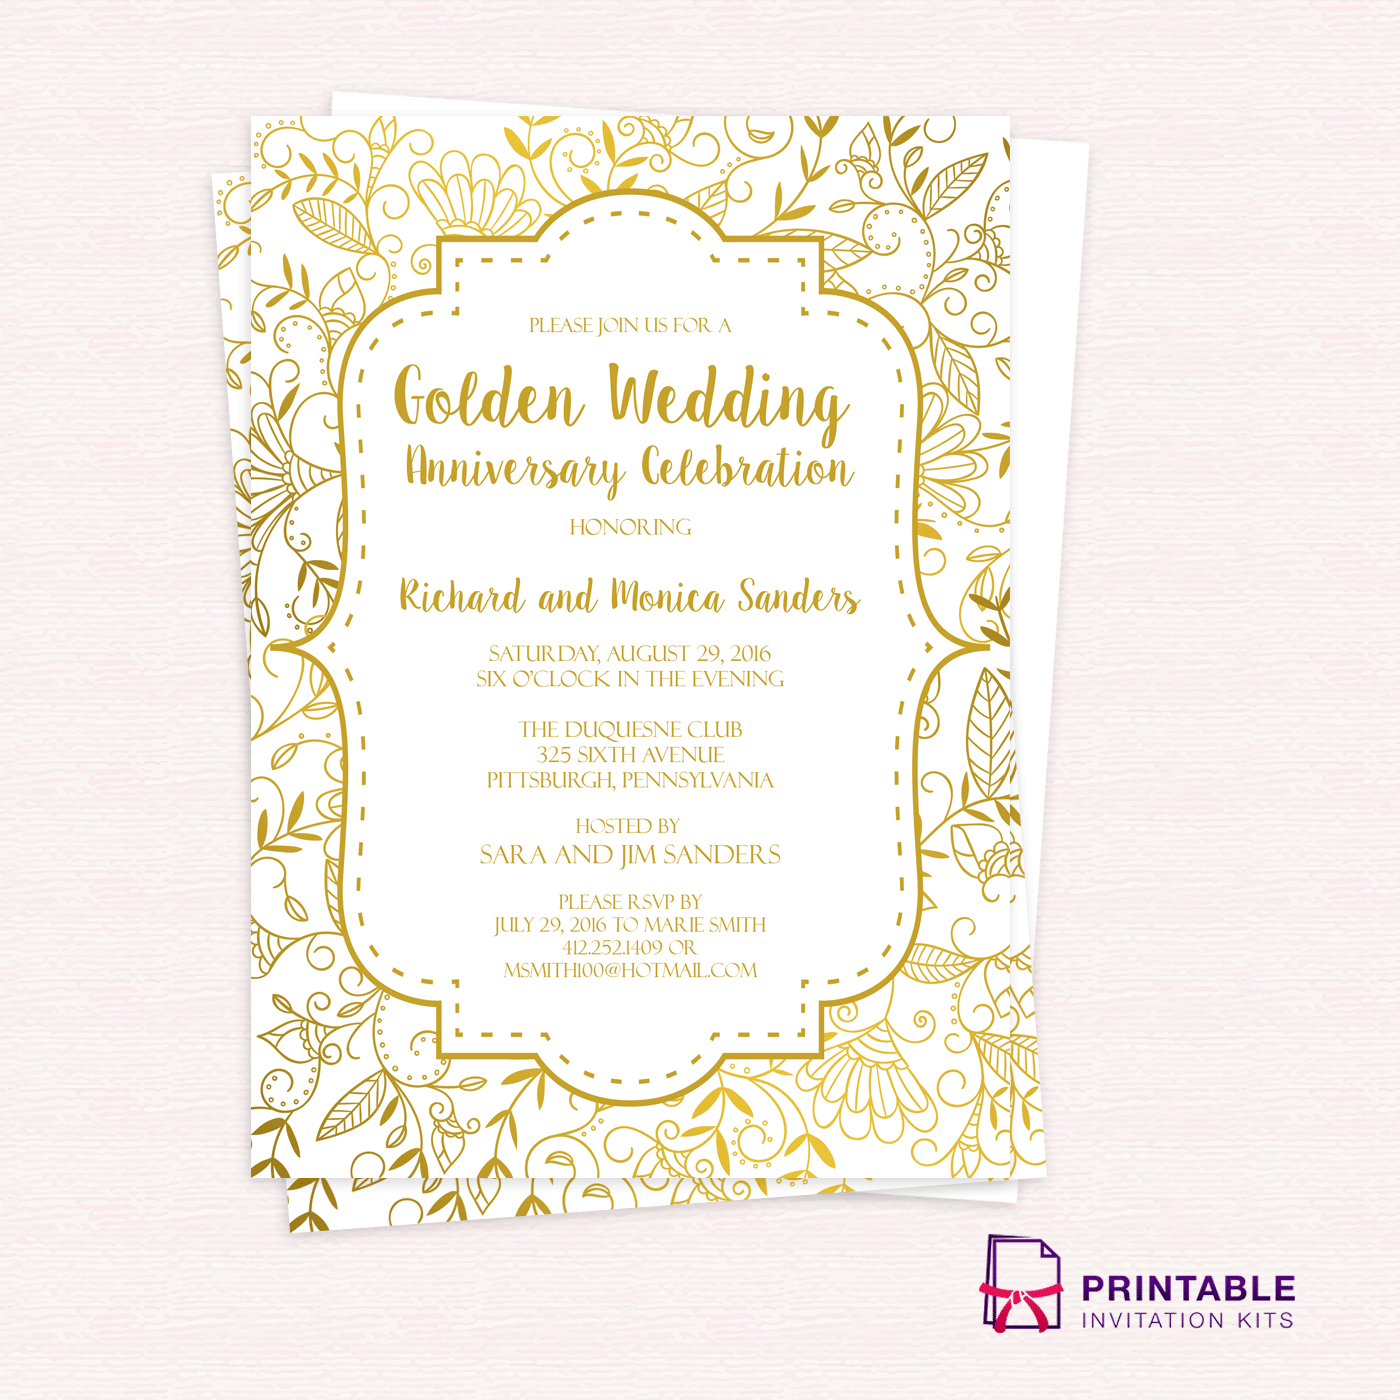 Golden Wedding Anniversary Invitation Template ← Wedding Invitation - Wedding Invitation Cards Printable Free